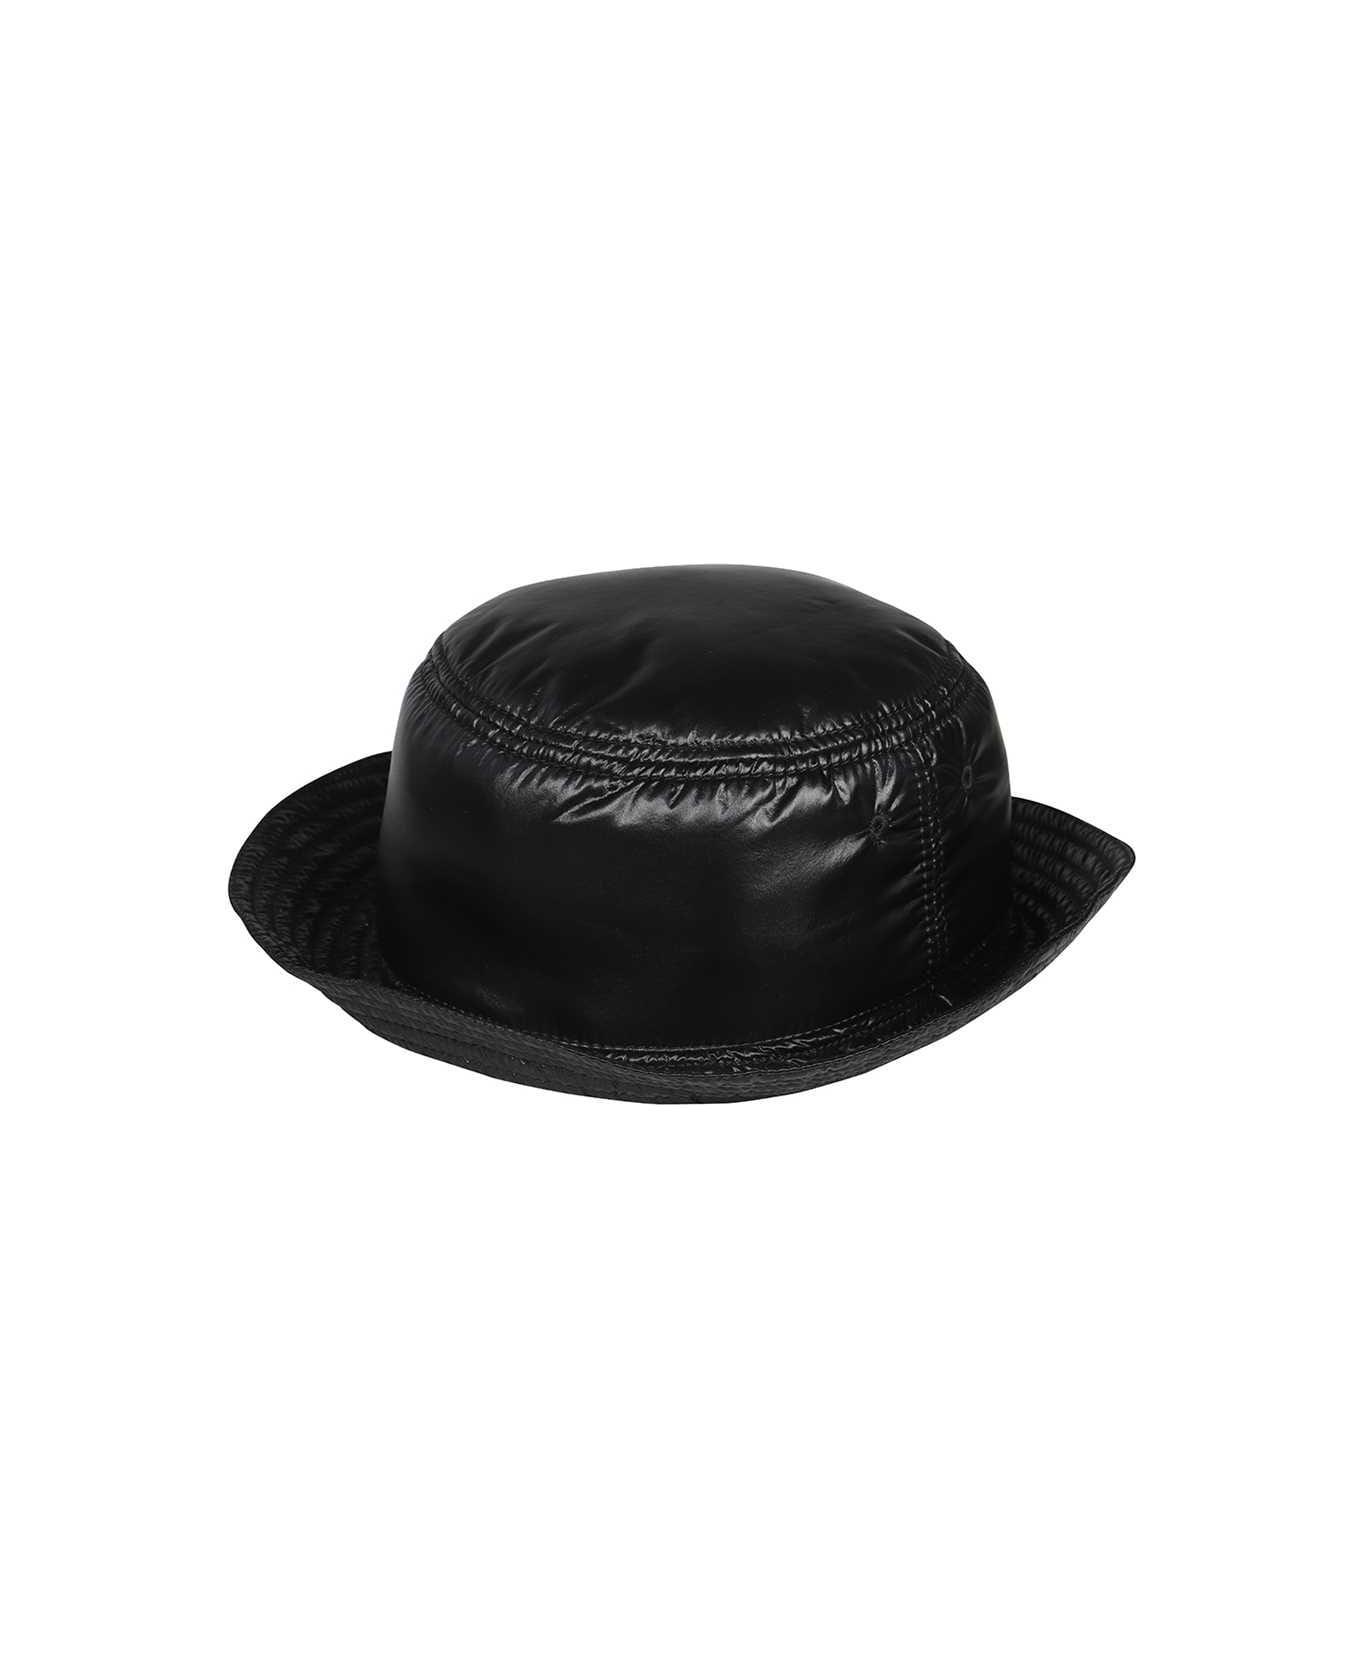 Moschino Bucket Hat - black 帽子